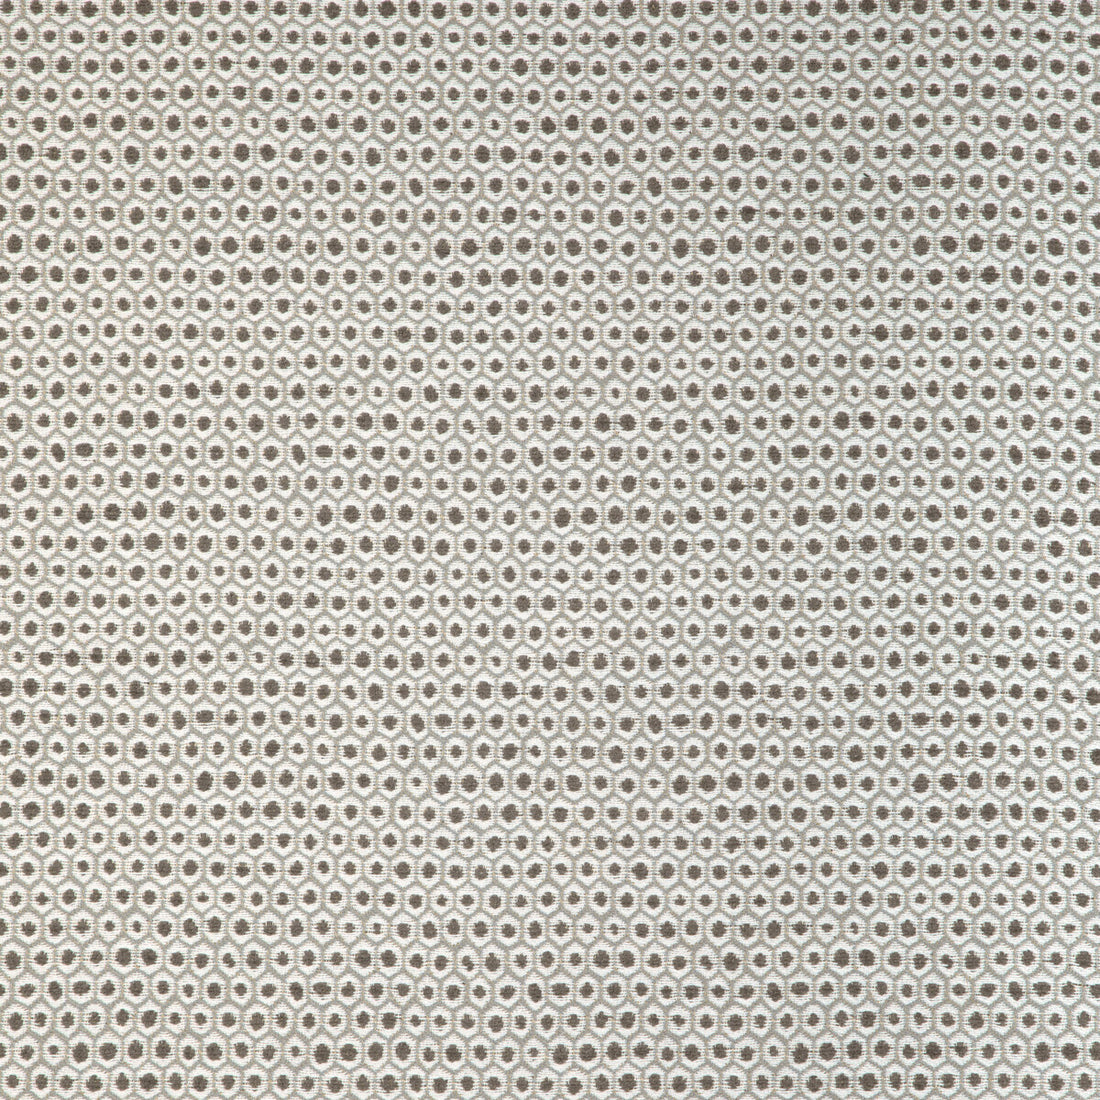 Kravet Smart fabric in 37004-1121 color - pattern 37004.1121.0 - by Kravet Smart in the Pavilion collection